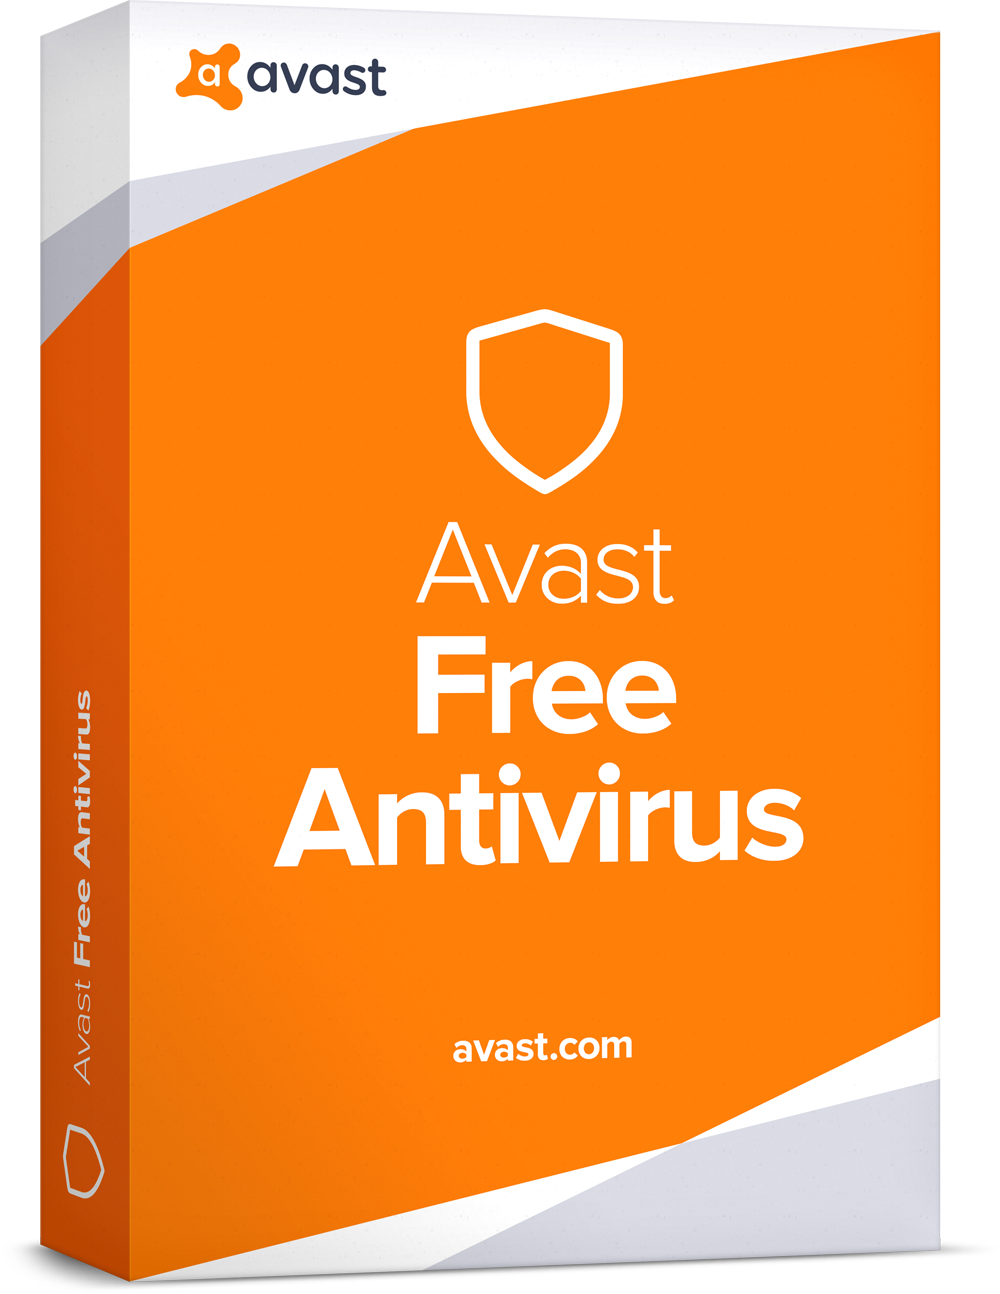 Avast mac security free